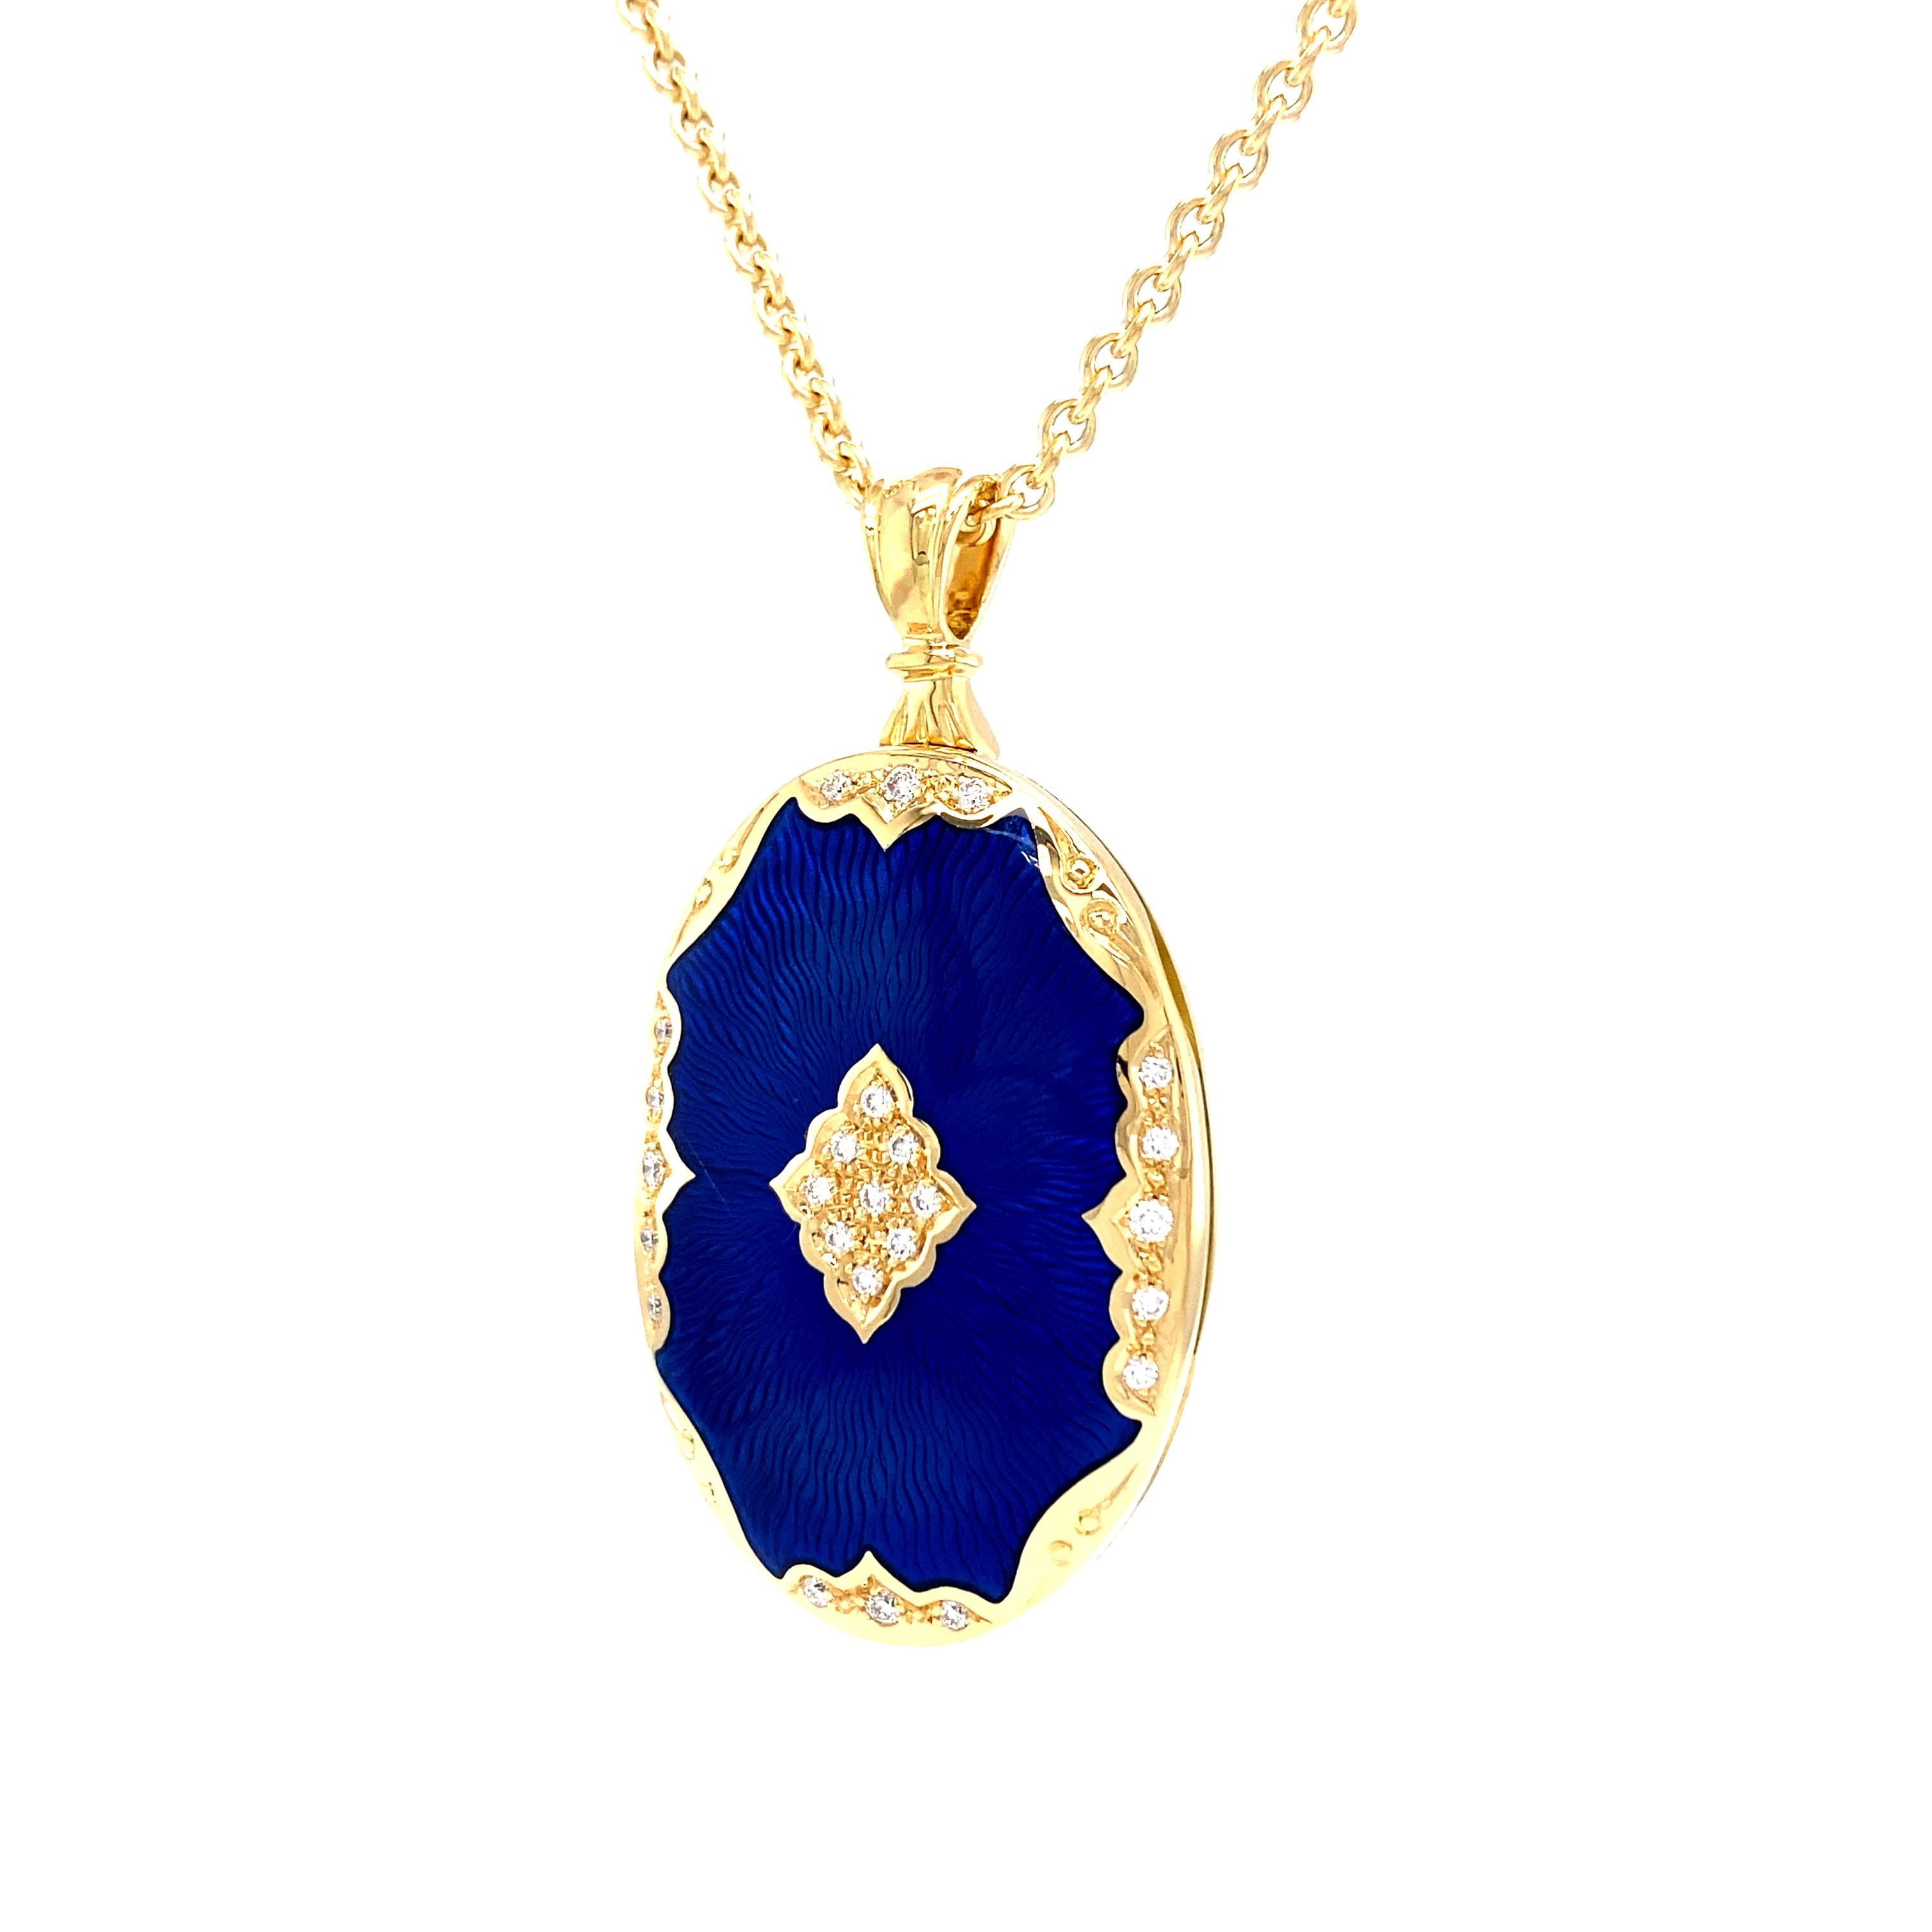 Oval Locket Pendant Necklace 18k Yellow Gold Blue Enamel 25 Diamonds 0.19 Carat For Sale 4